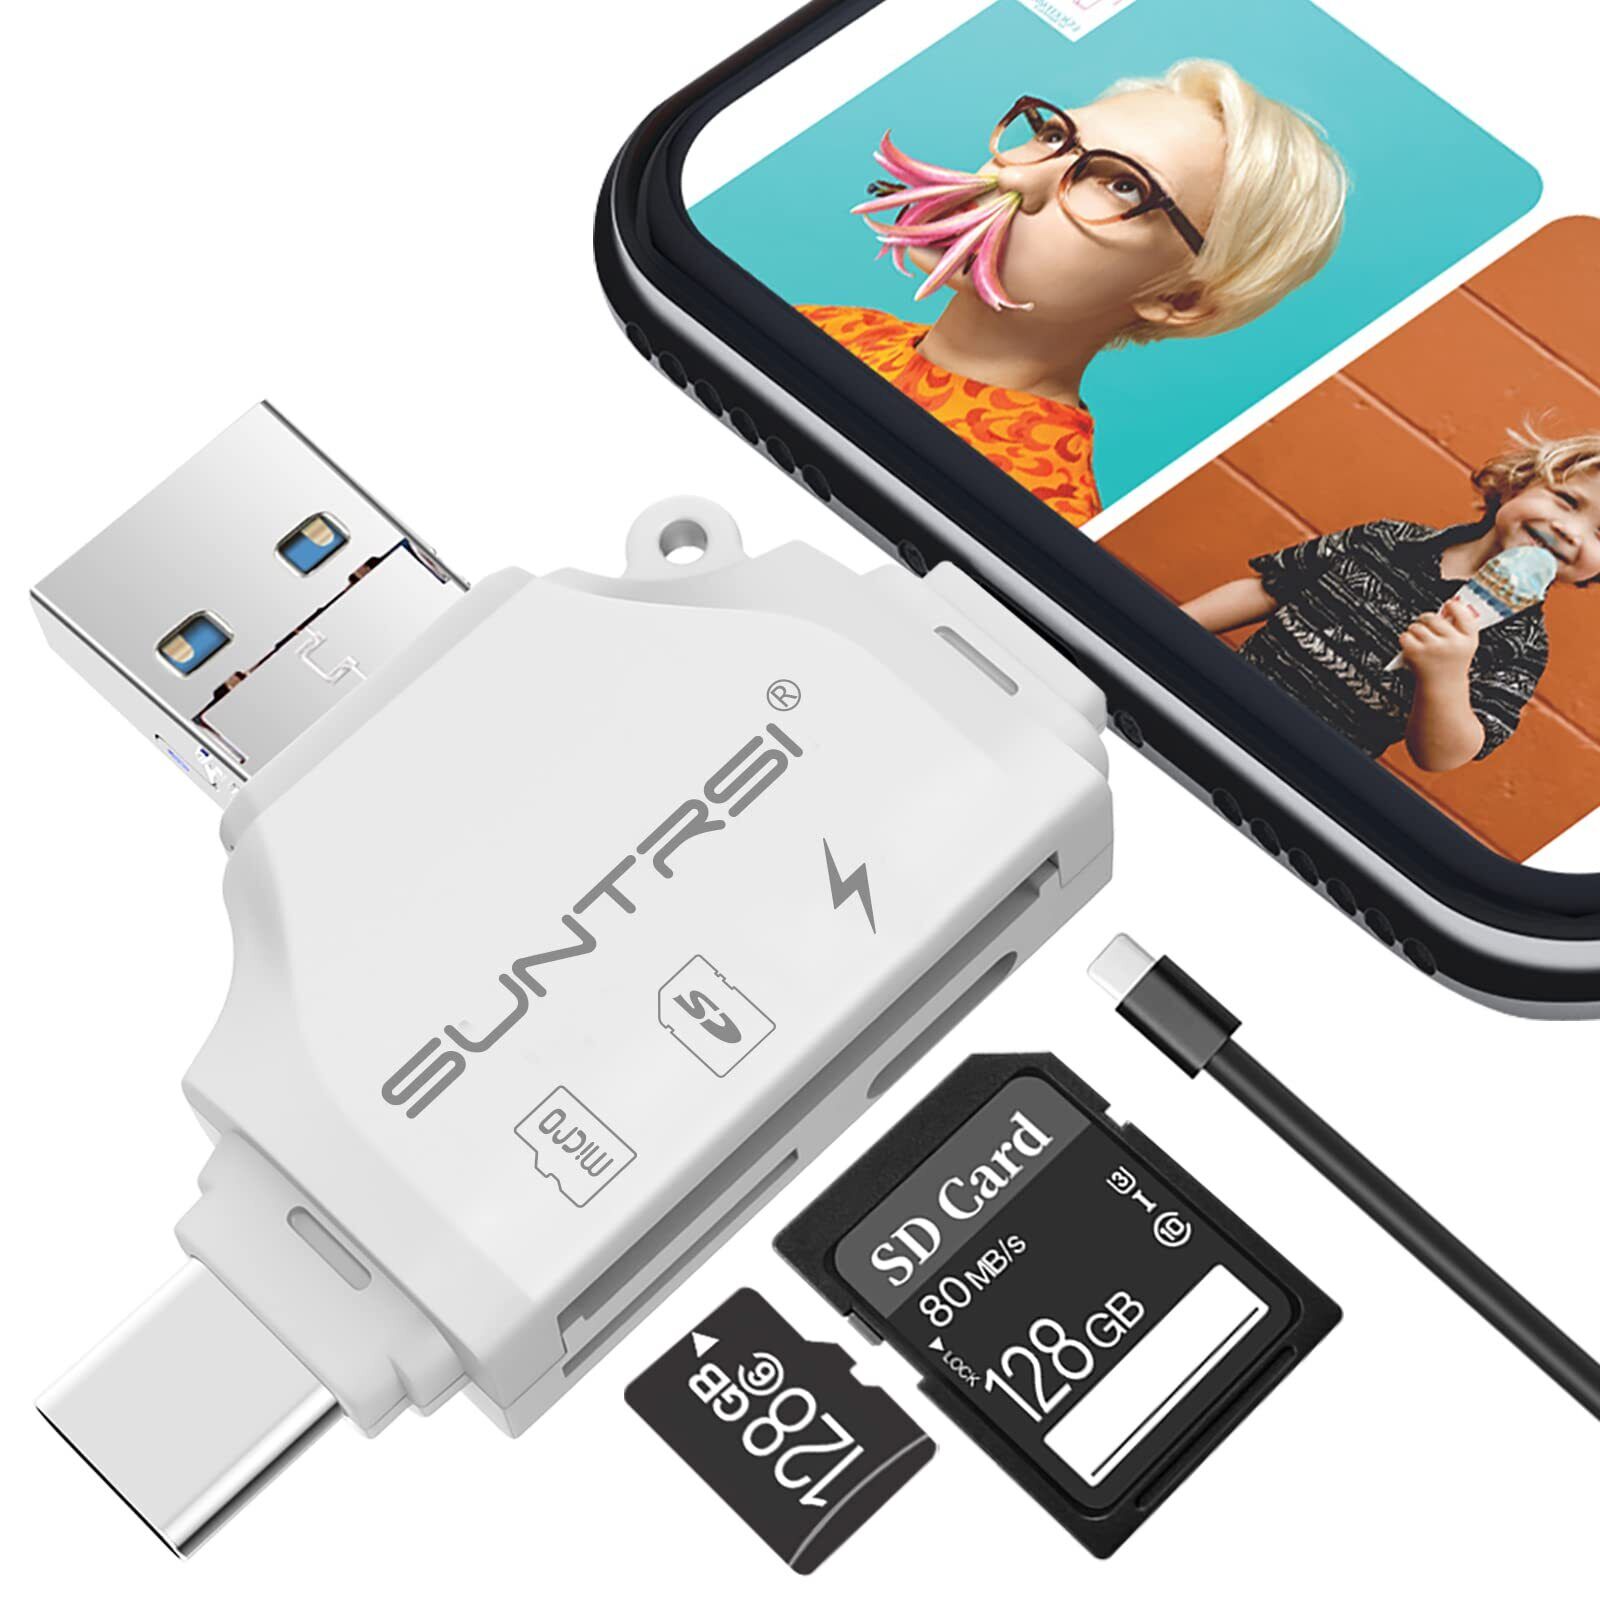 SD/Micro SD Card Reader for iPhone/ipad/Android/Mac/Computer/Camera,Portable ...